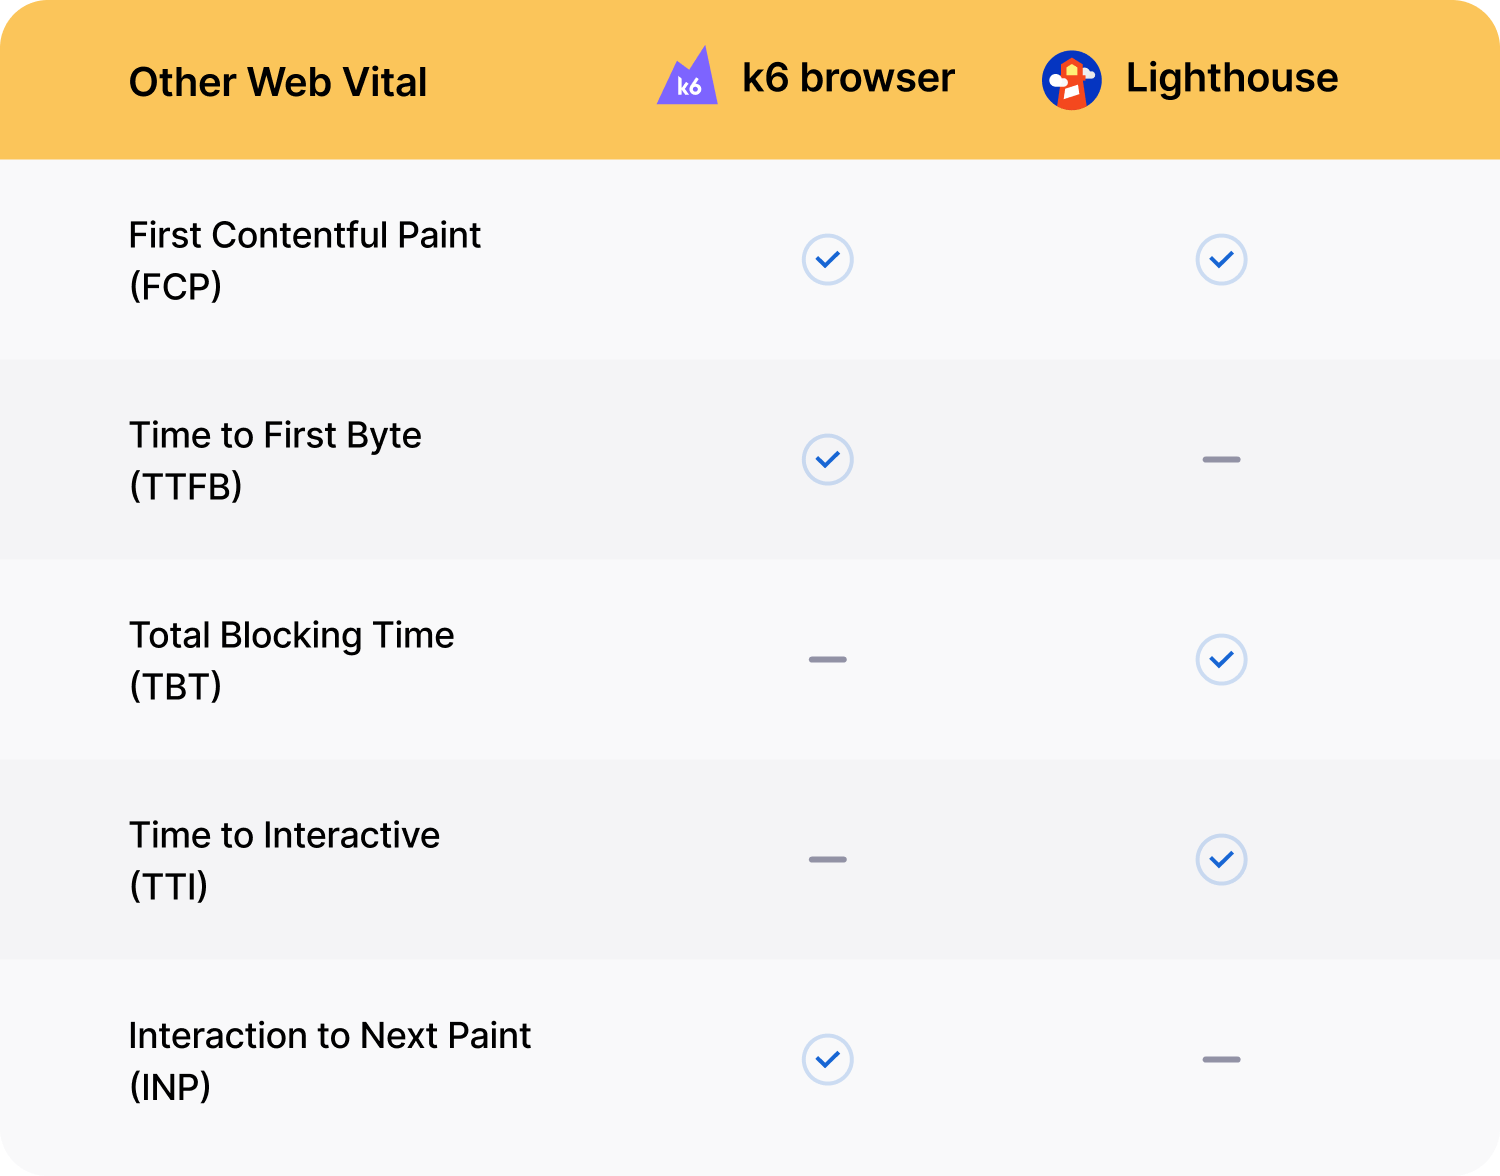 k6 browser vs. Lighthouse Other Web Vitals